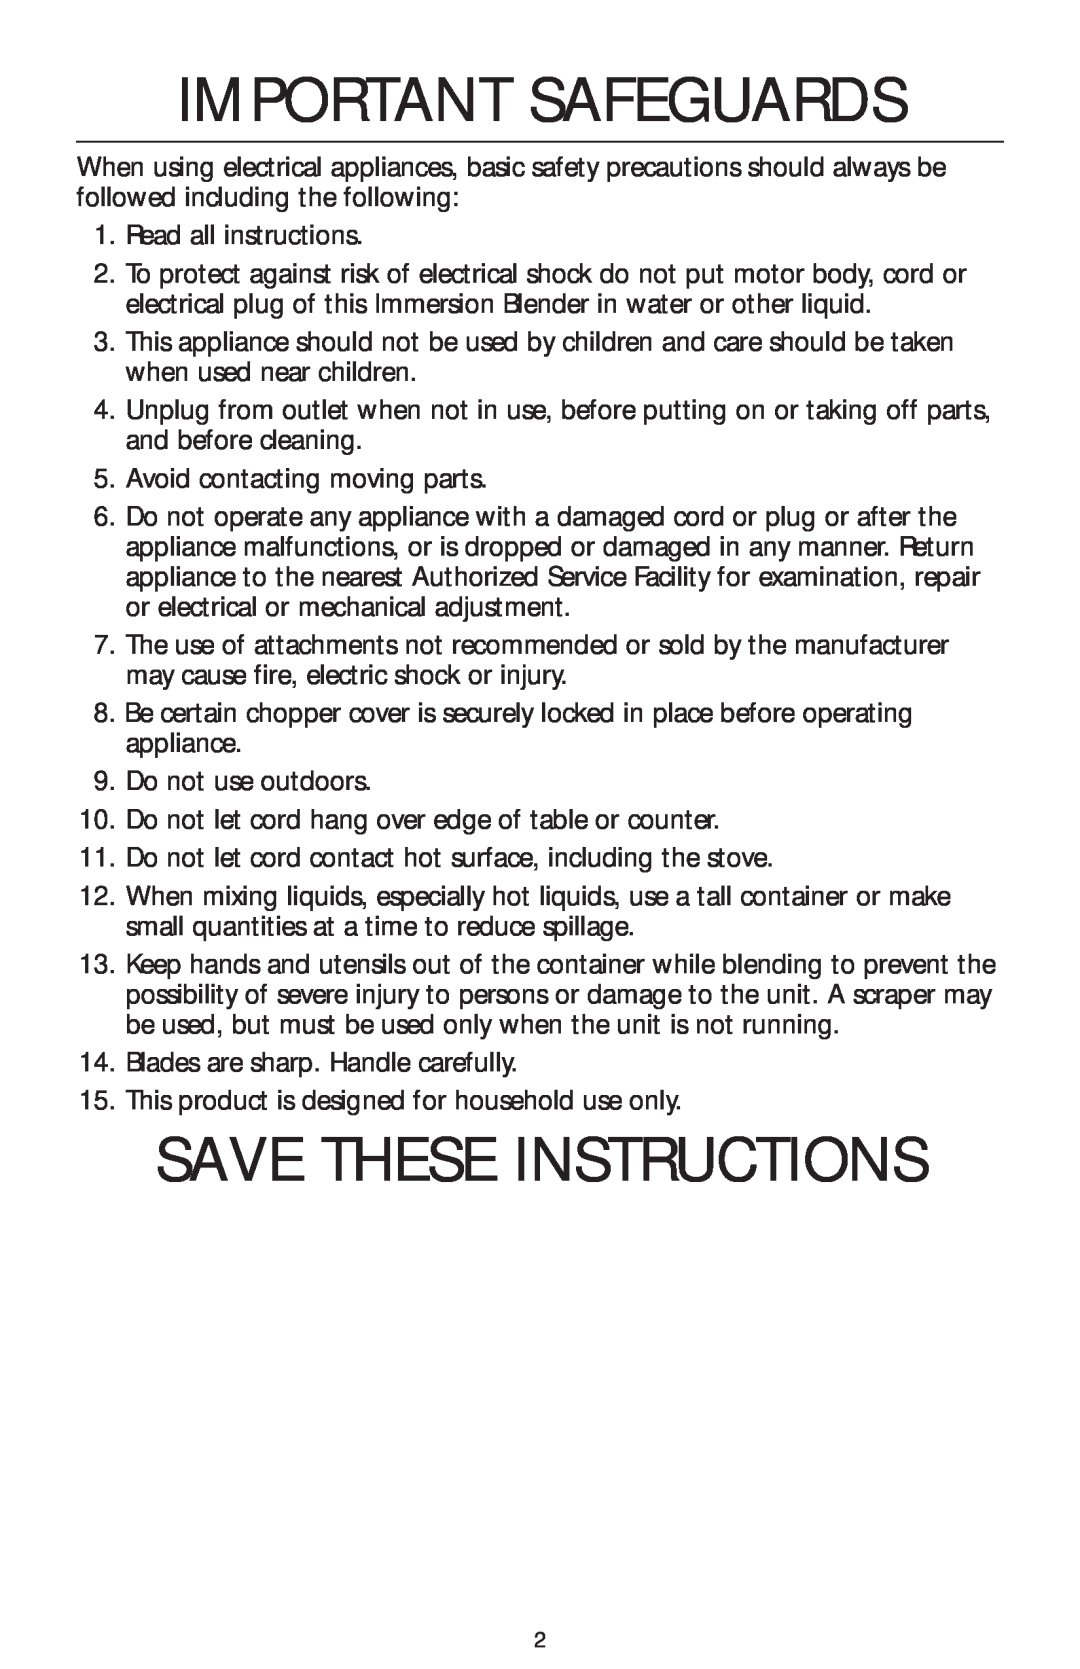 KitchenAid KHB200, KHB100, KHB300 manual Important Safeguards, Save These Instructions 